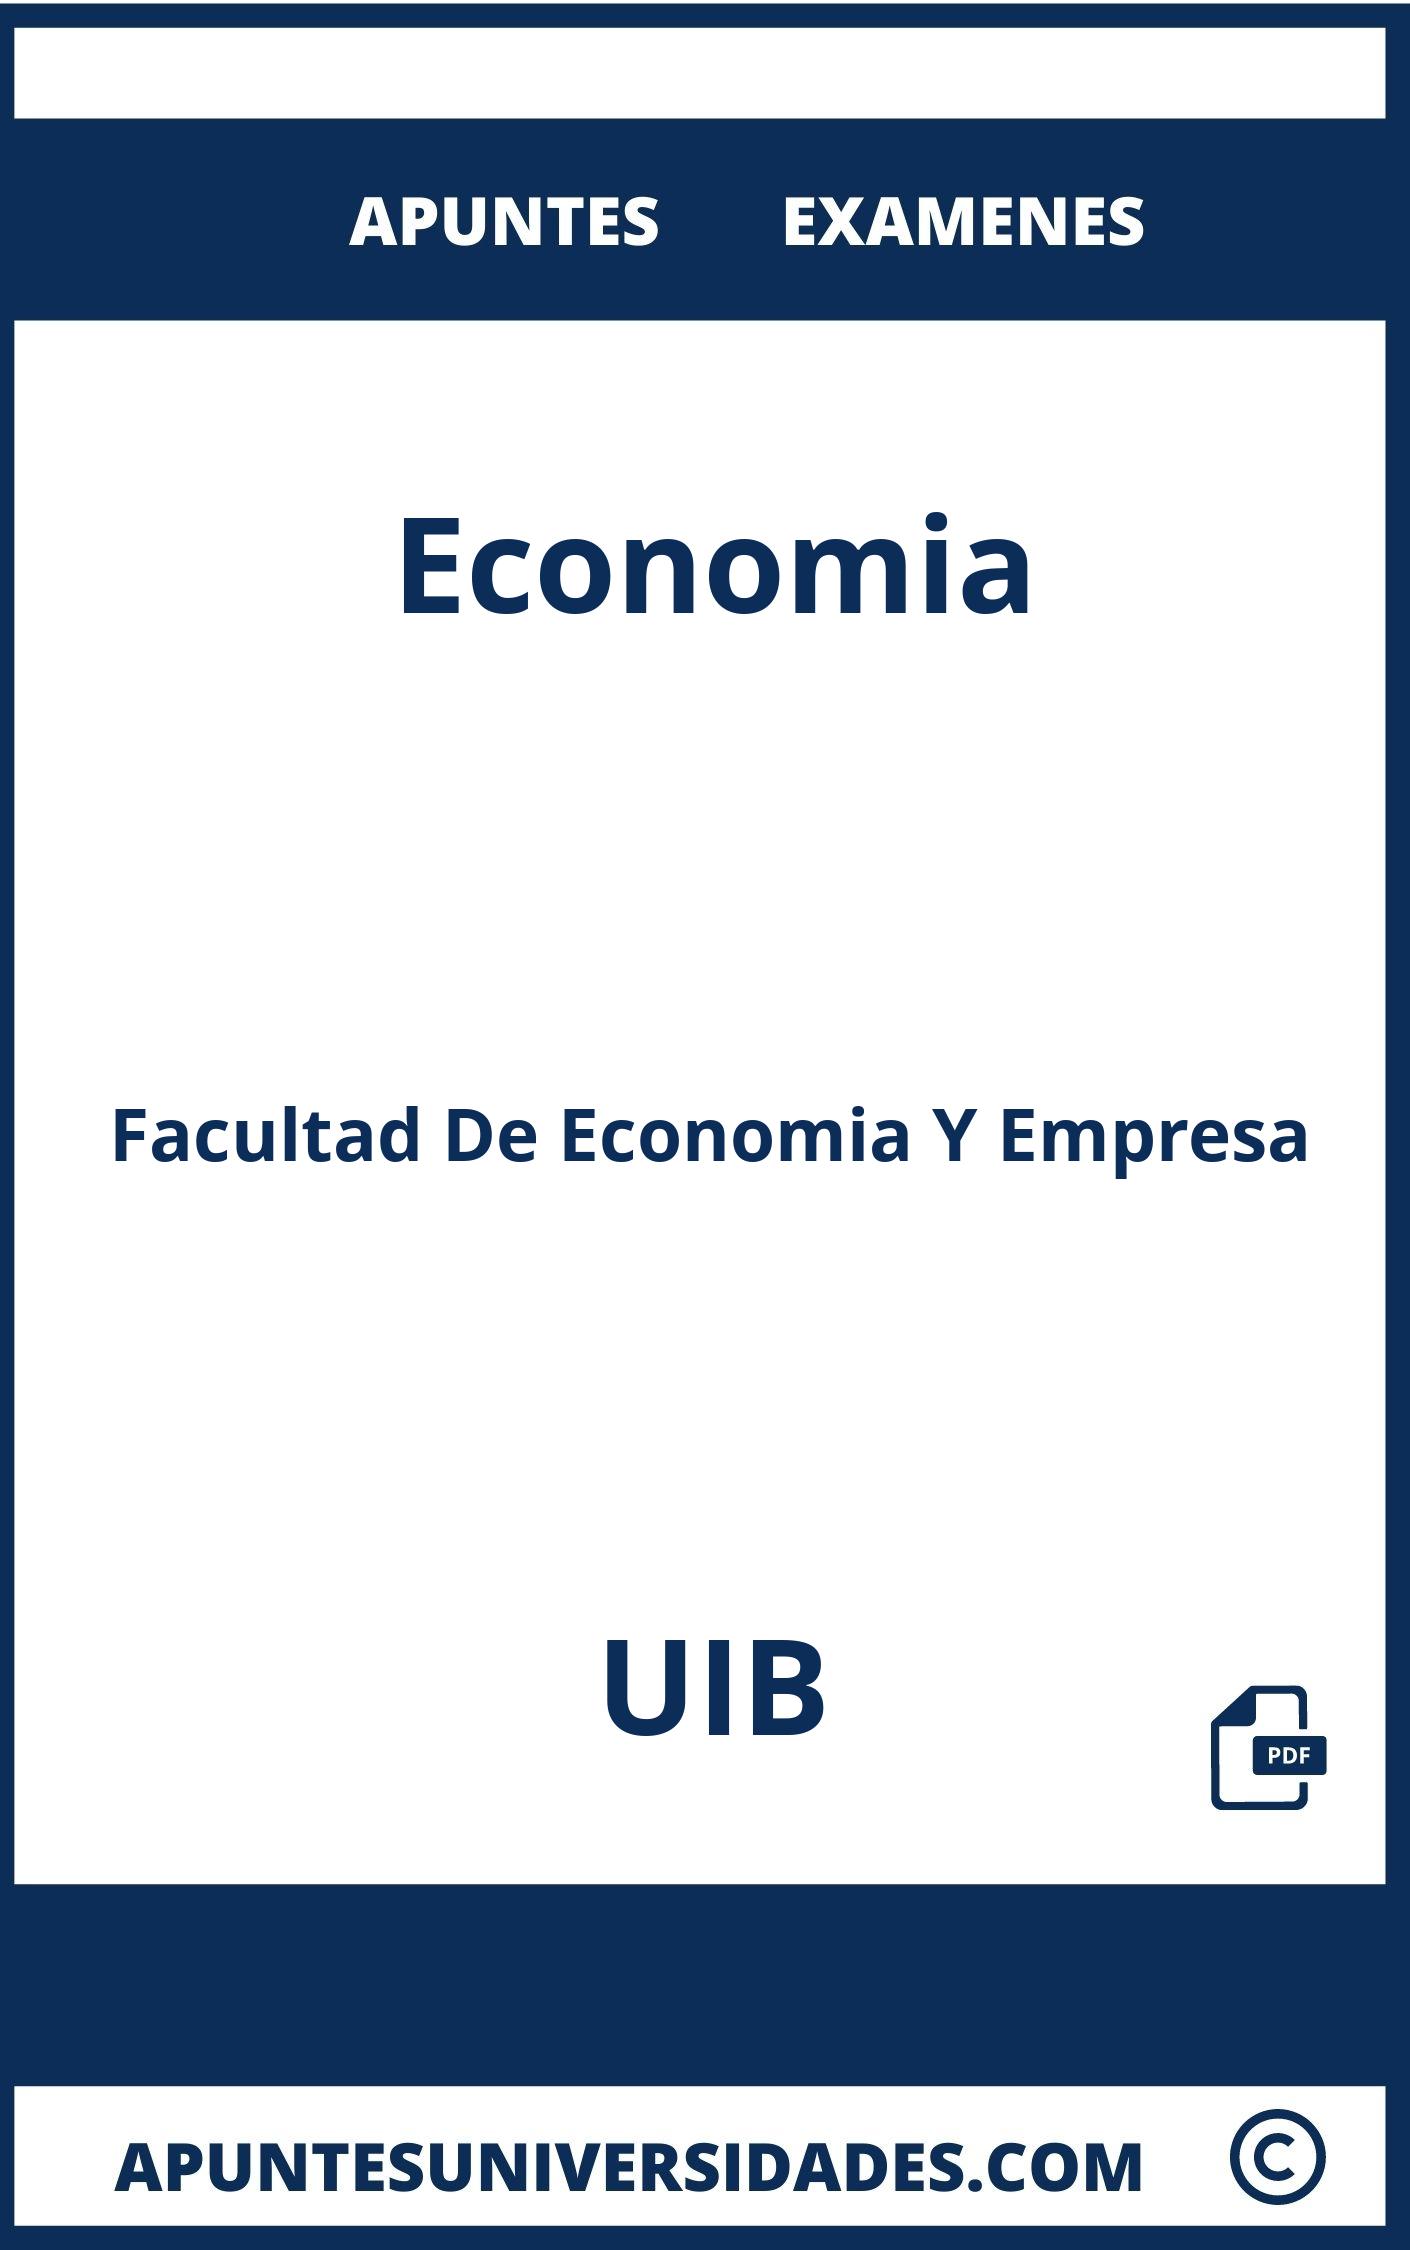 Examenes Apuntes Economia UIB